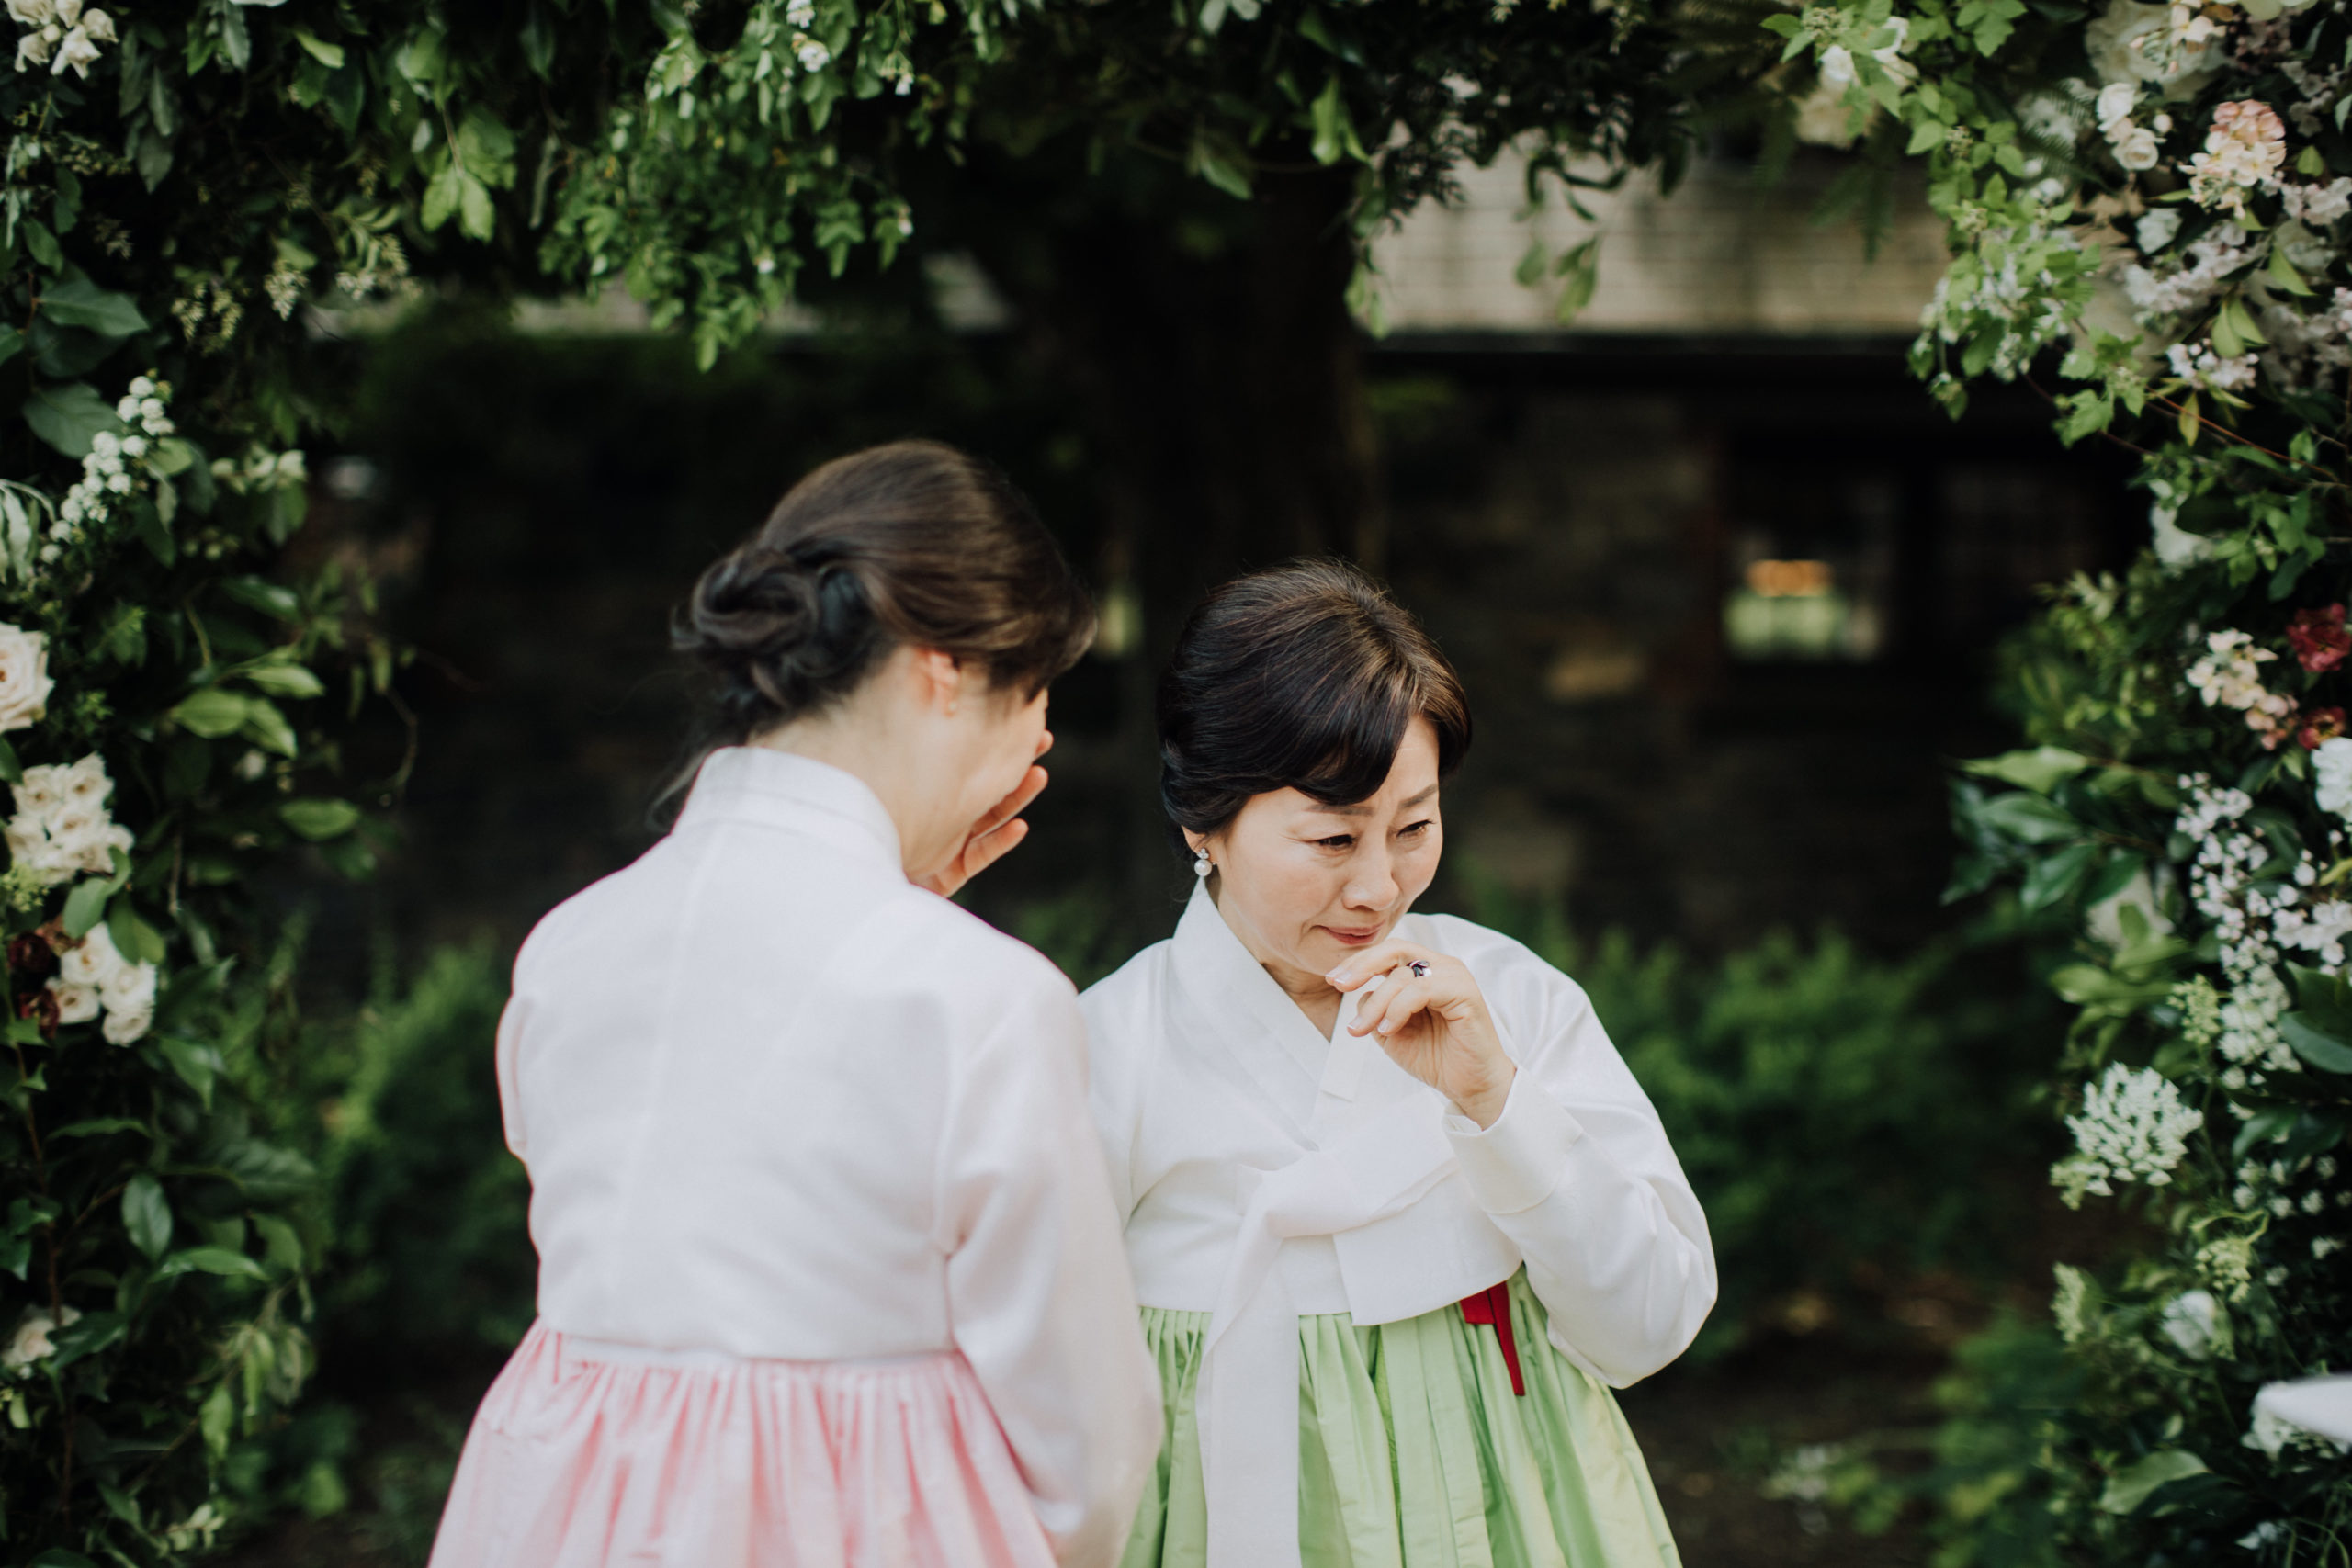 Bicultural elegant wedding with Hanbok dresses